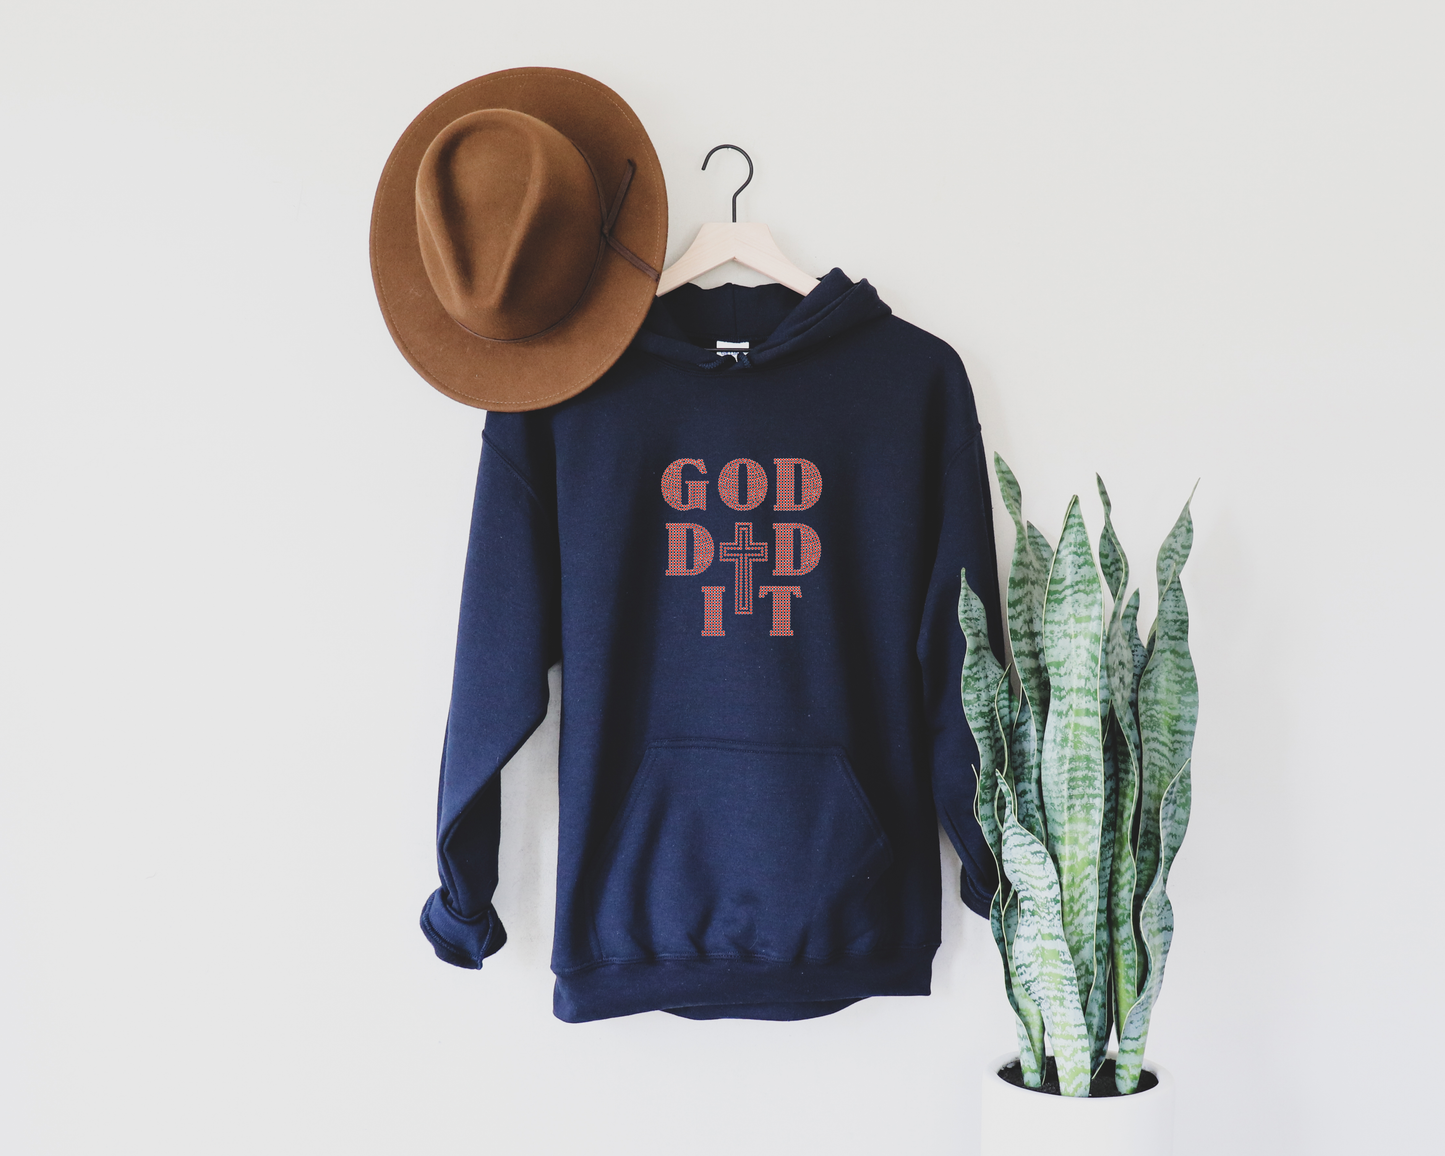 God Did it Rhinestone hoodies/sweatshirts